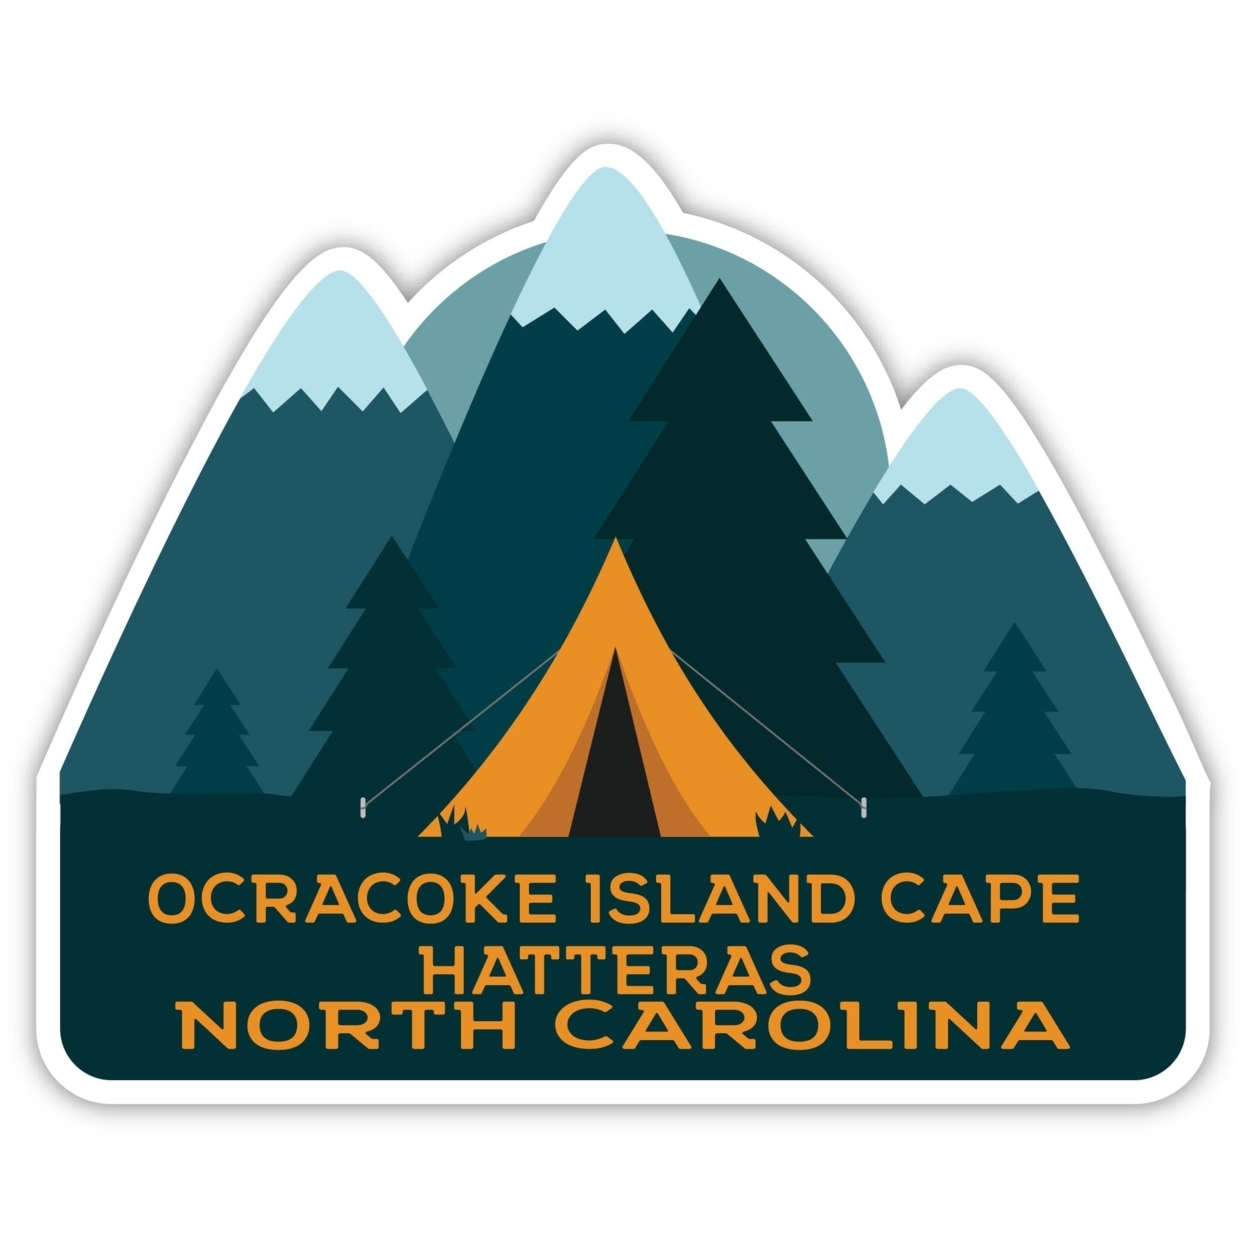 Ocracoke Island Cape Hatteras North Carolina Souvenir Decorative Stickers (Choose Theme And Size) - Single Unit, 4-Inch, Tent